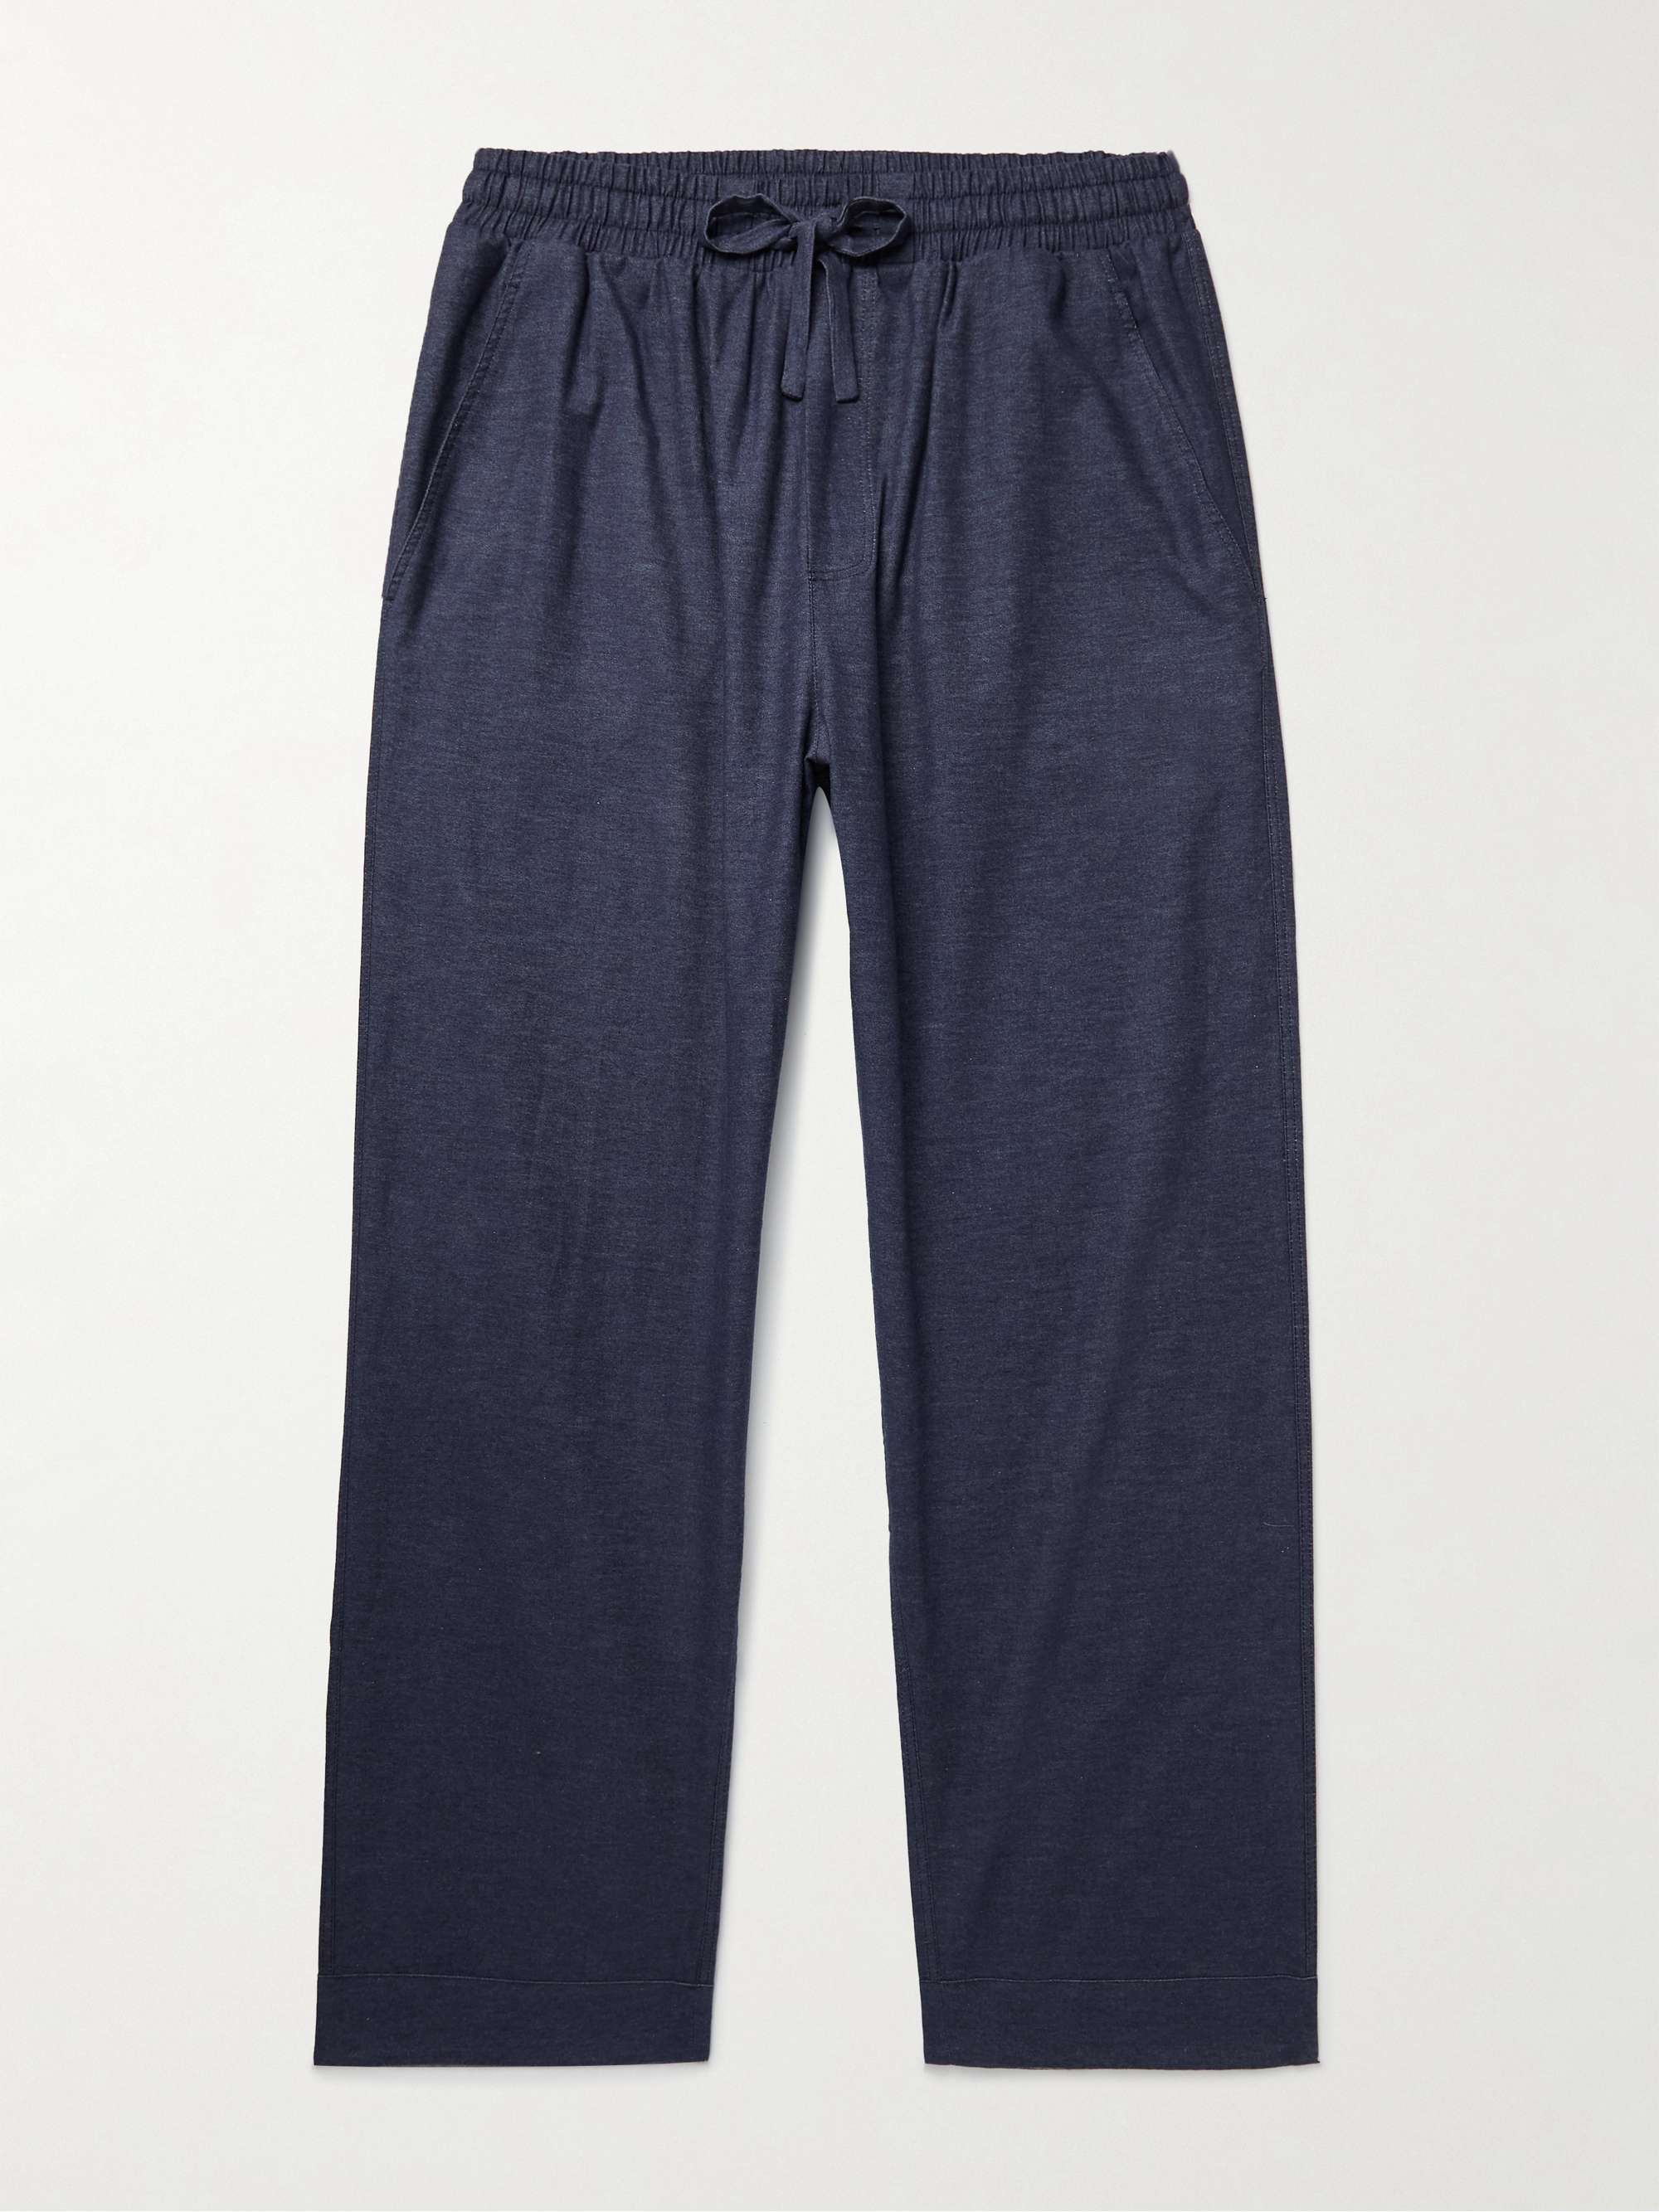 ZEGNA Cotton Pyjama Trousers